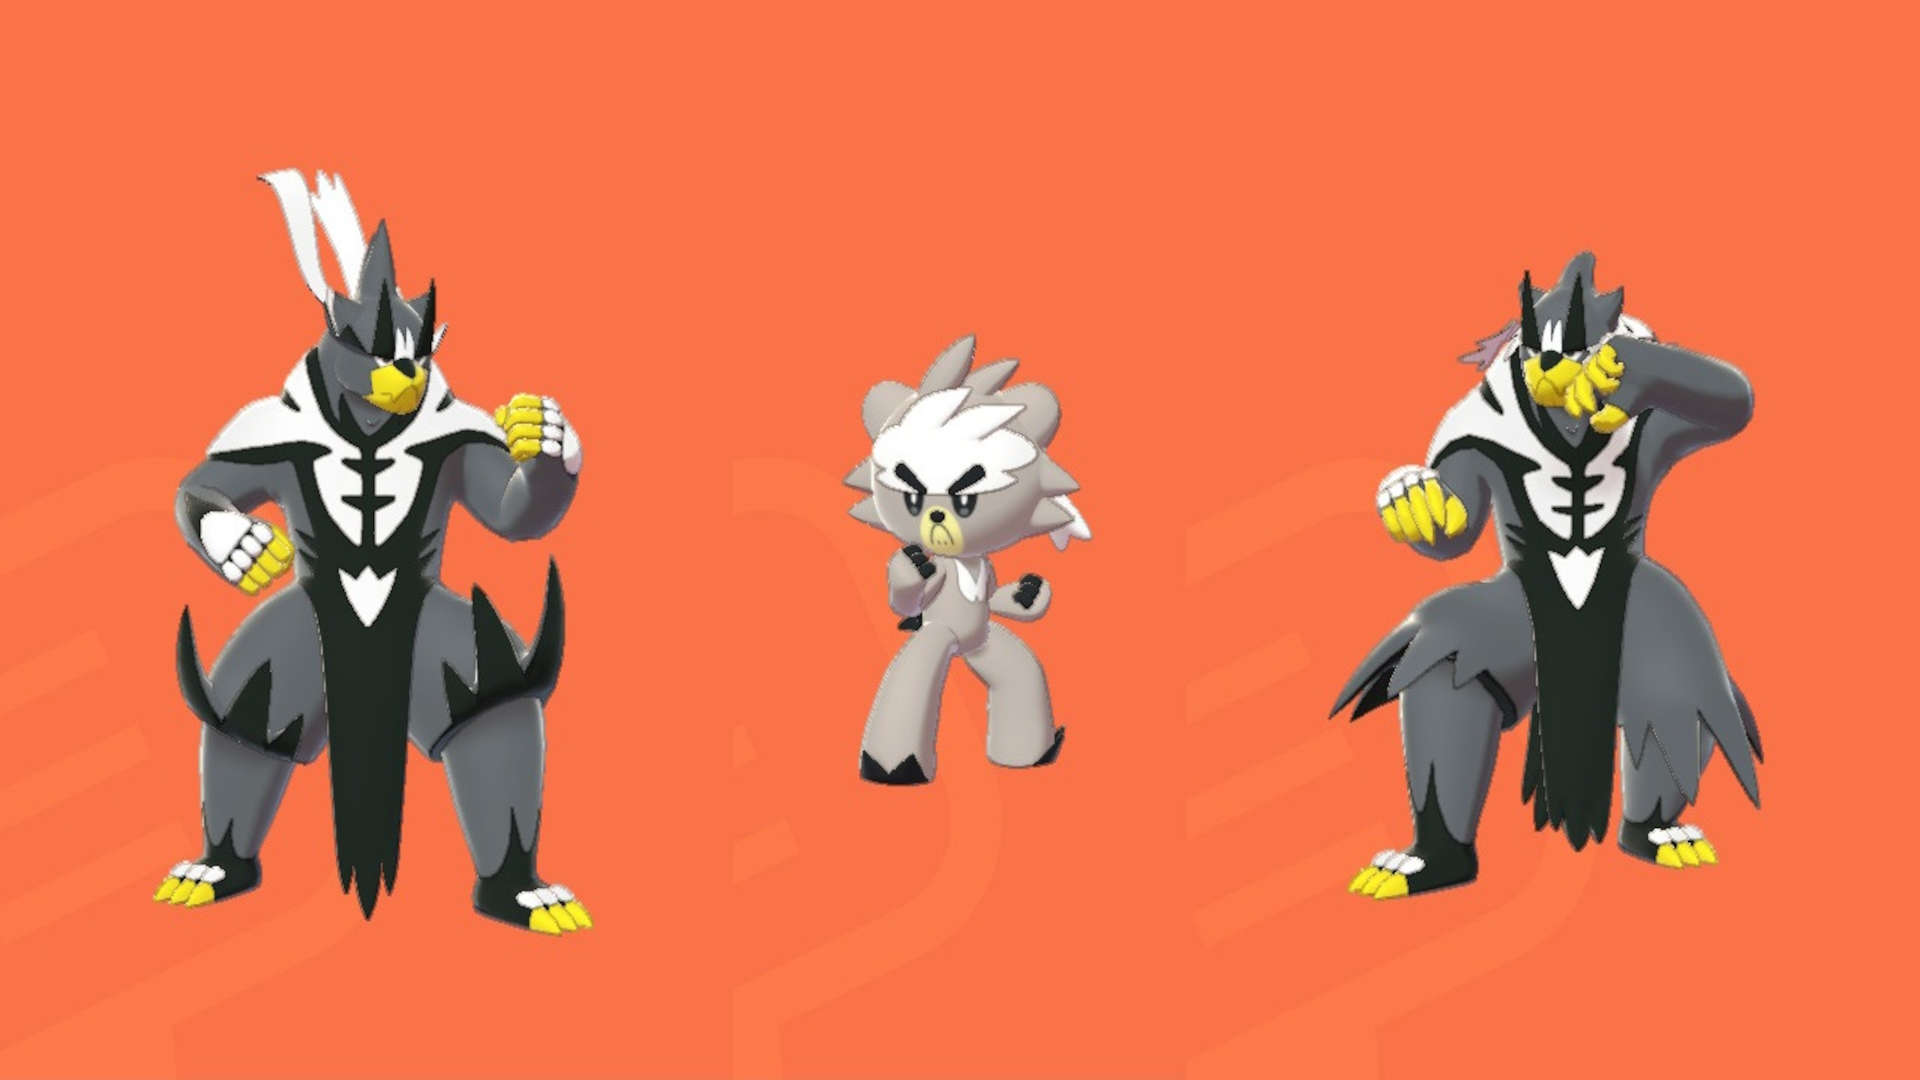 Pokémon Sword and Shield legendary Pokémon: Three Pokémon standing with a boxer-like pose against an orange background.